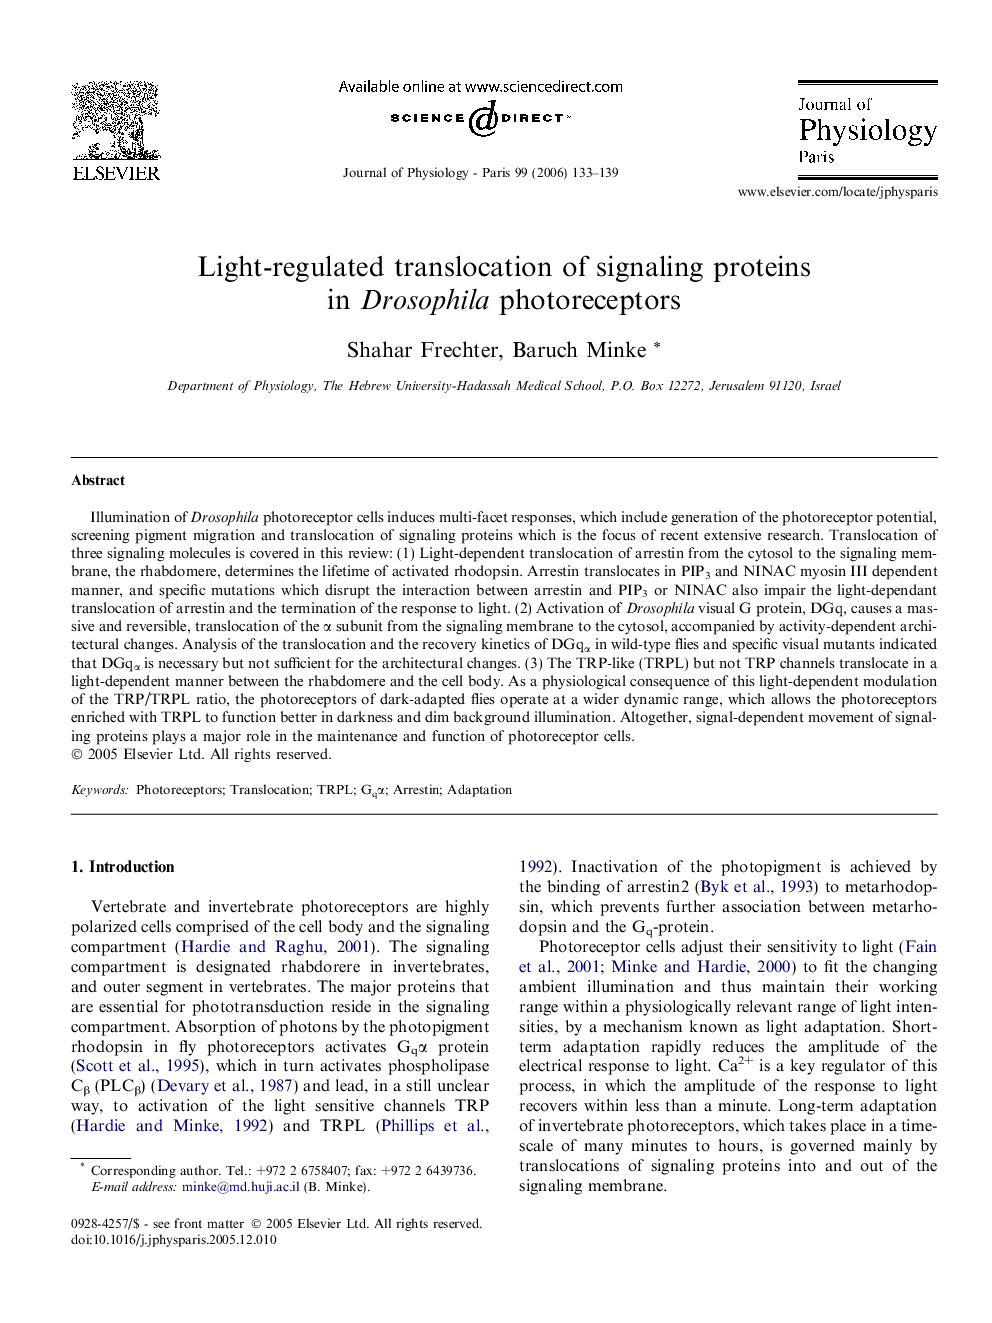 Light-regulated translocation of signaling proteins in Drosophila photoreceptors